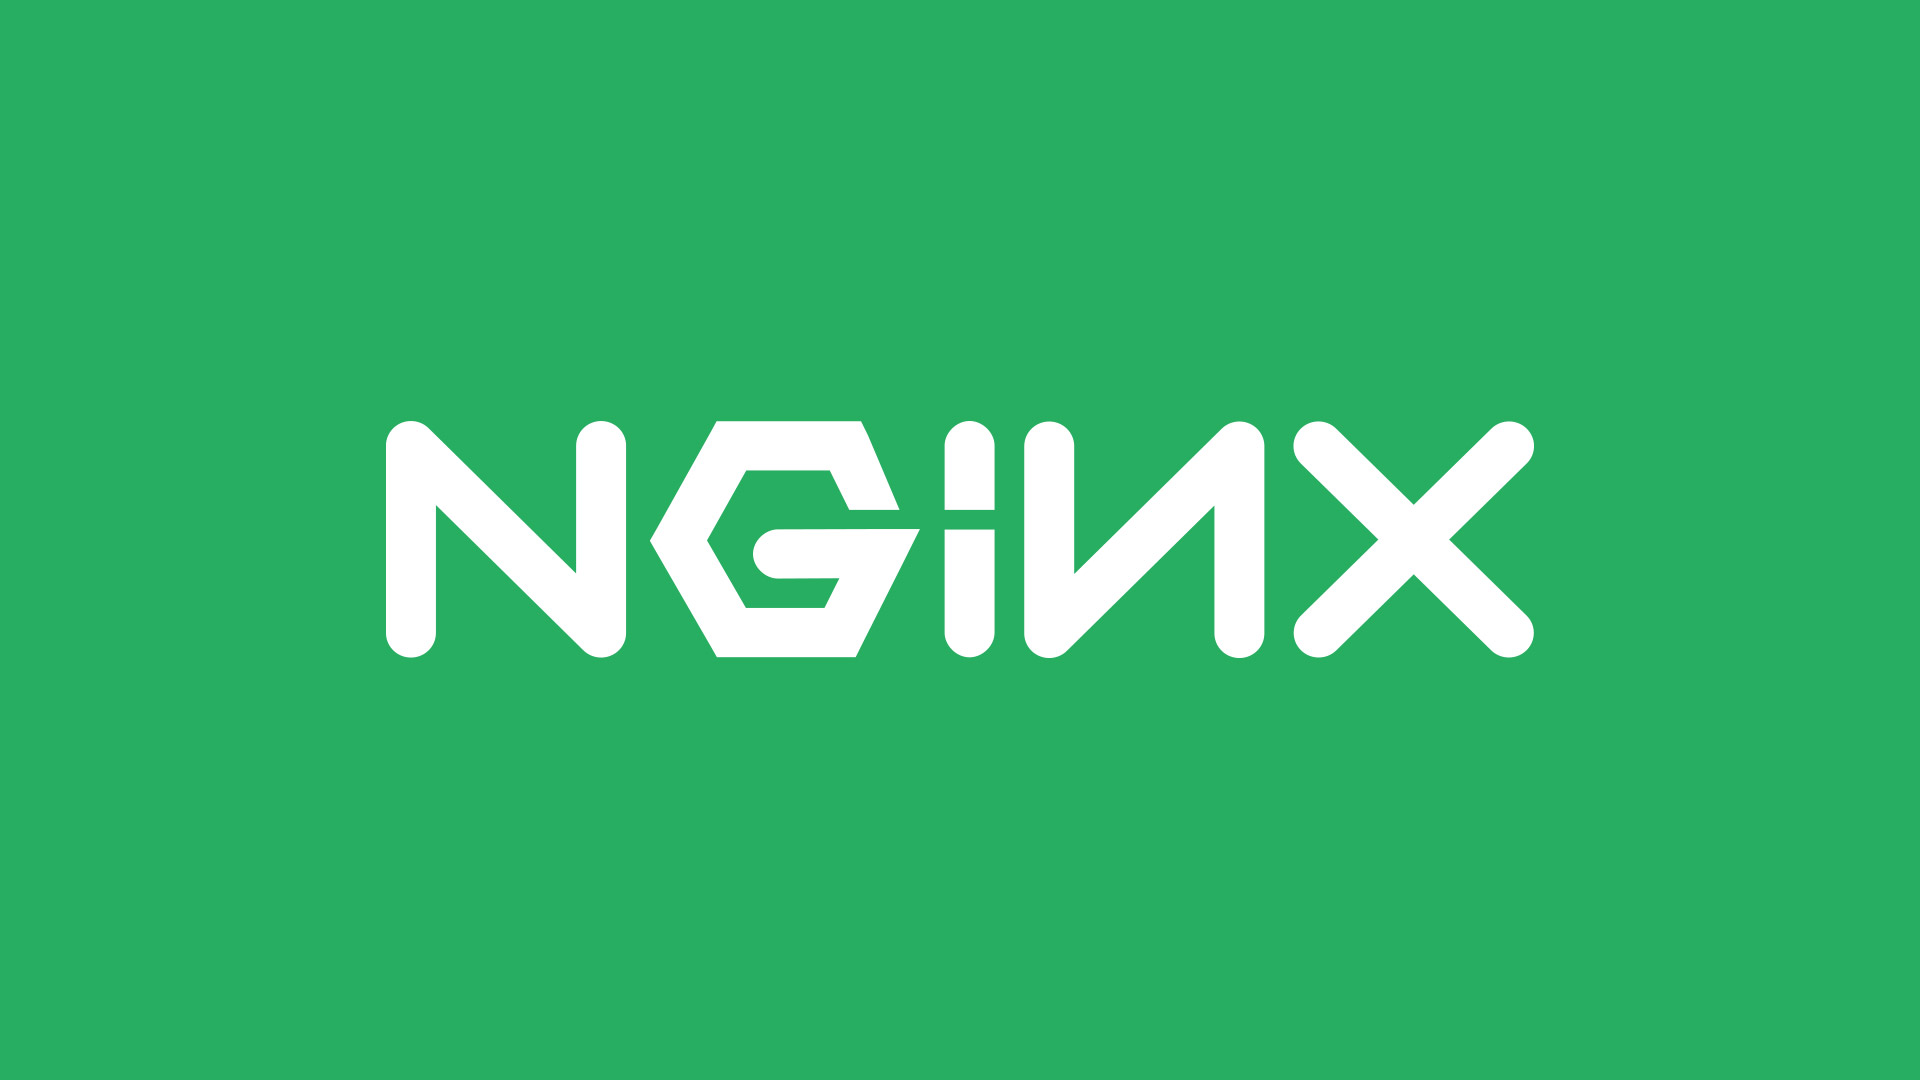 Nginx add. Nginx логотип. Веб сервер nginx. Nginx PNG. Веб сервер nginx лого.